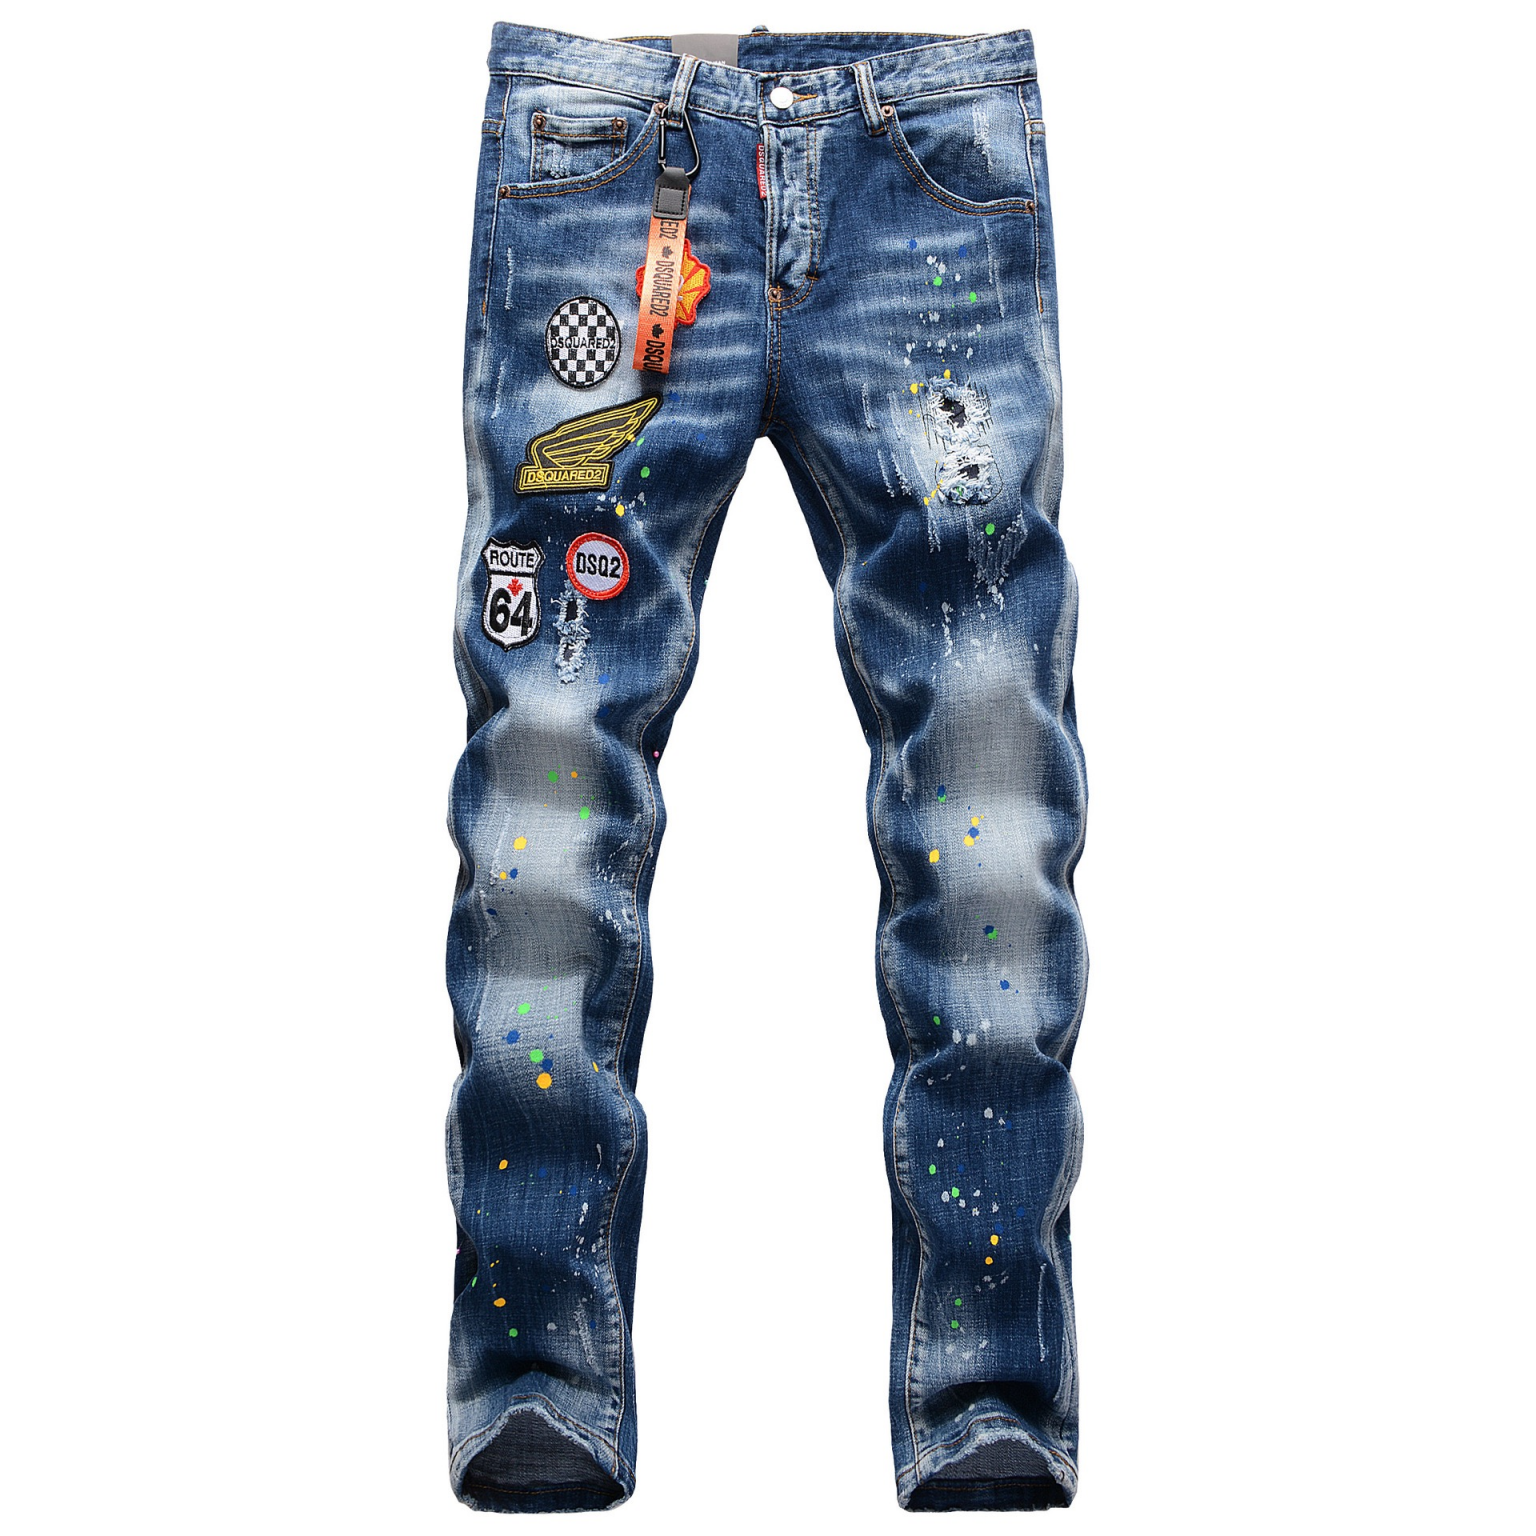 Men's jeans P1258 - dark blue | MODONE wholesale - Clothing For Men